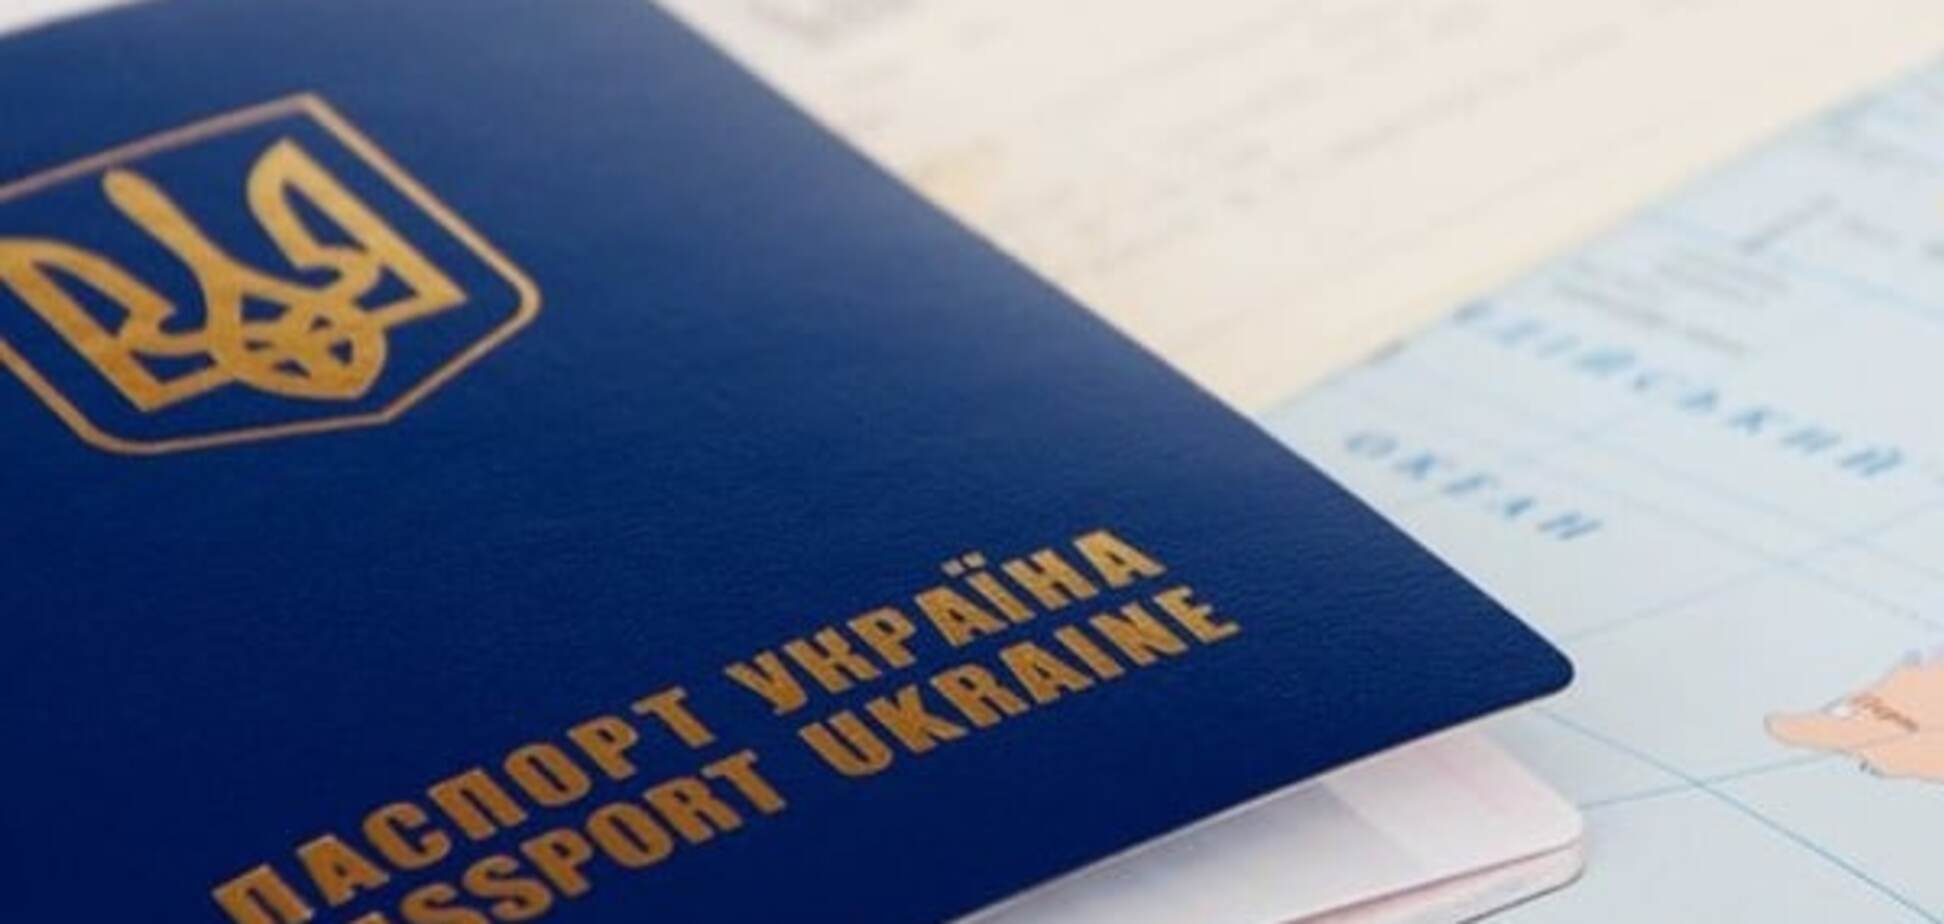 Український закордонний паспорт